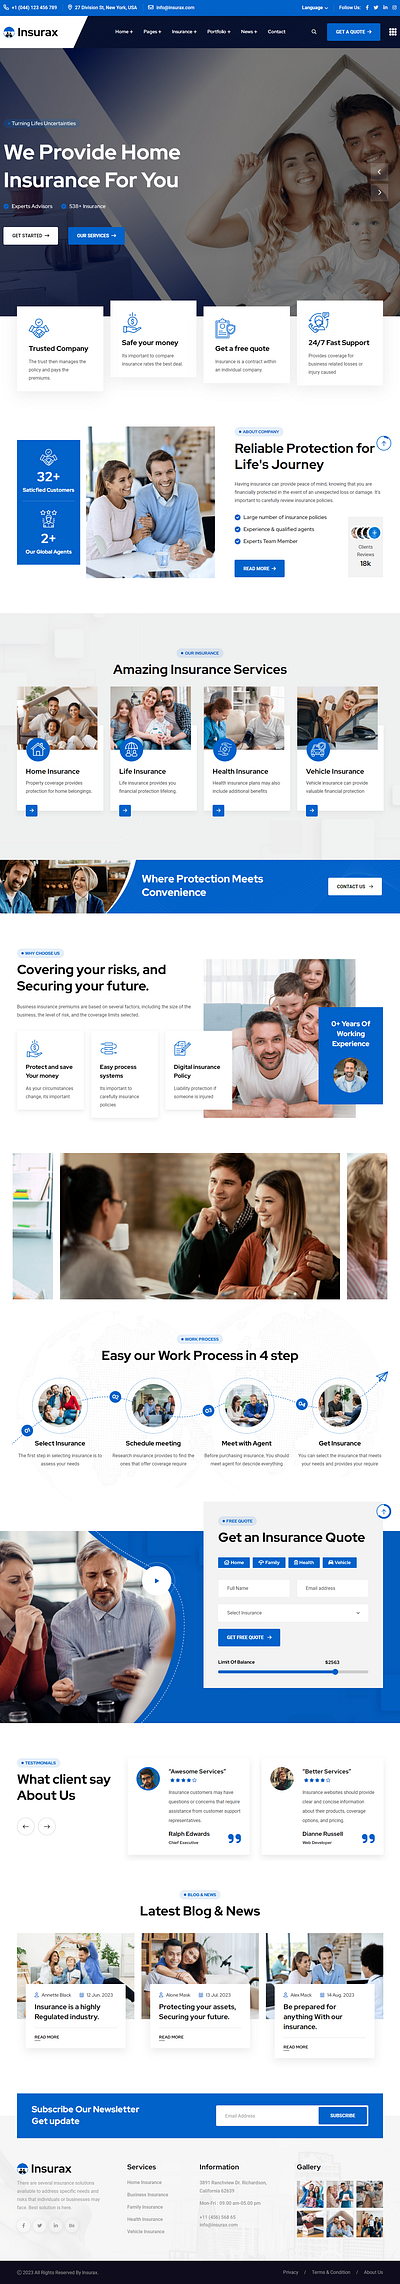 Insurax - Insurance Company HTML Template loan